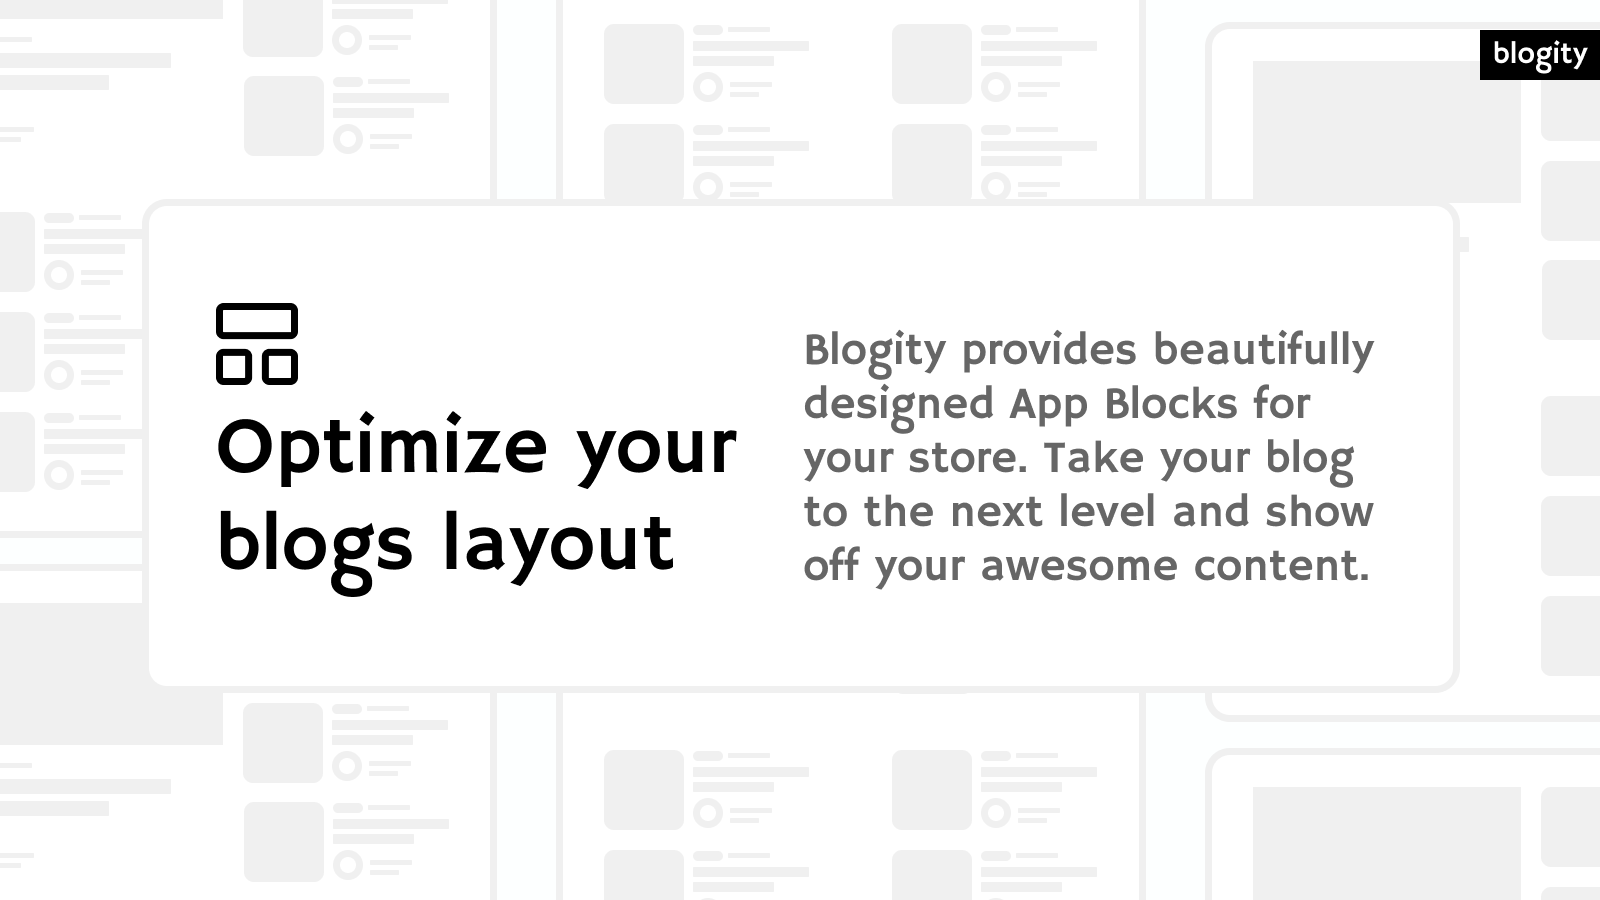 Optimize your blogs layout